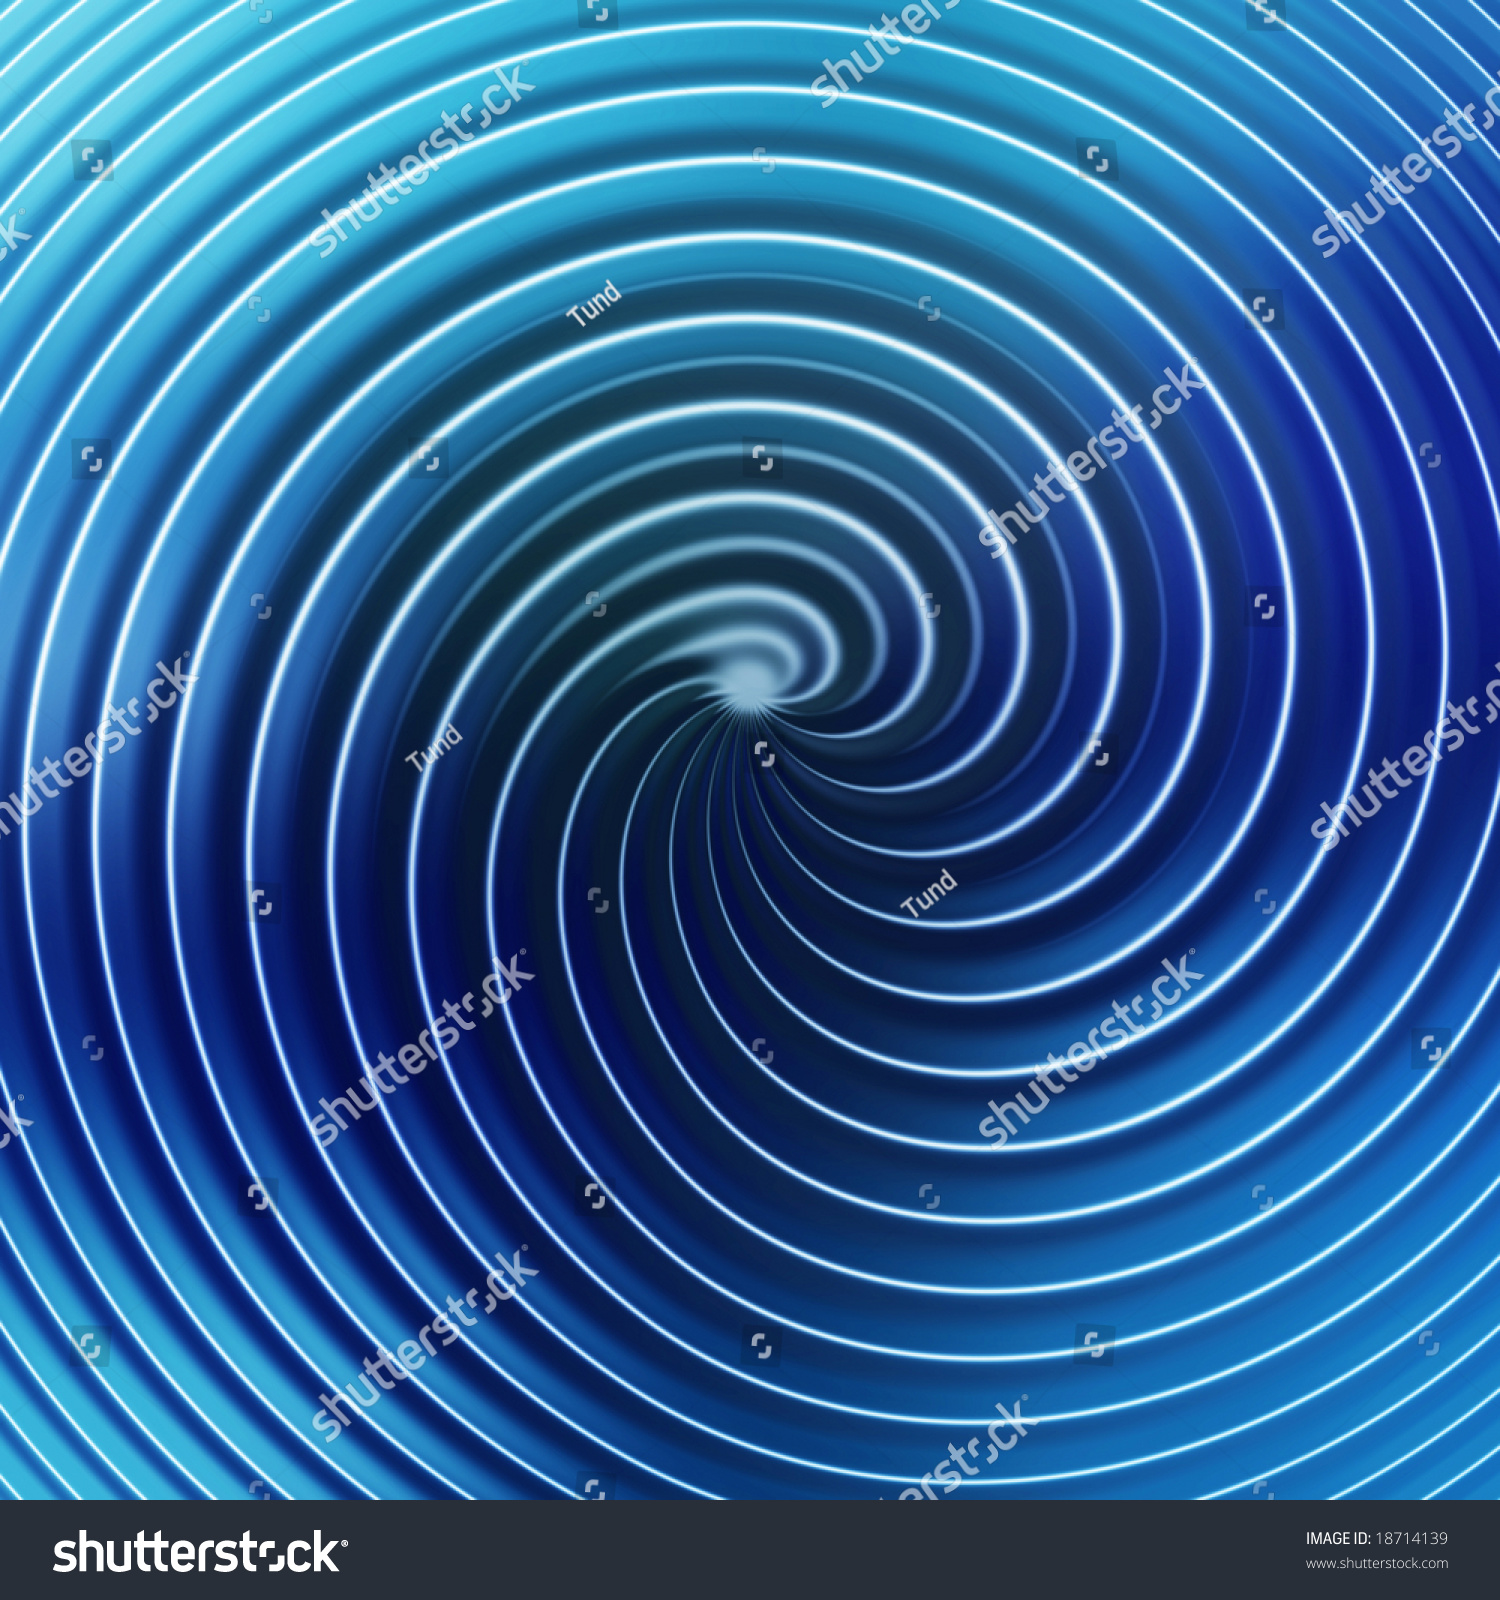 Blue Spiral Background Stock Illustration 18714139 - Shutterstock